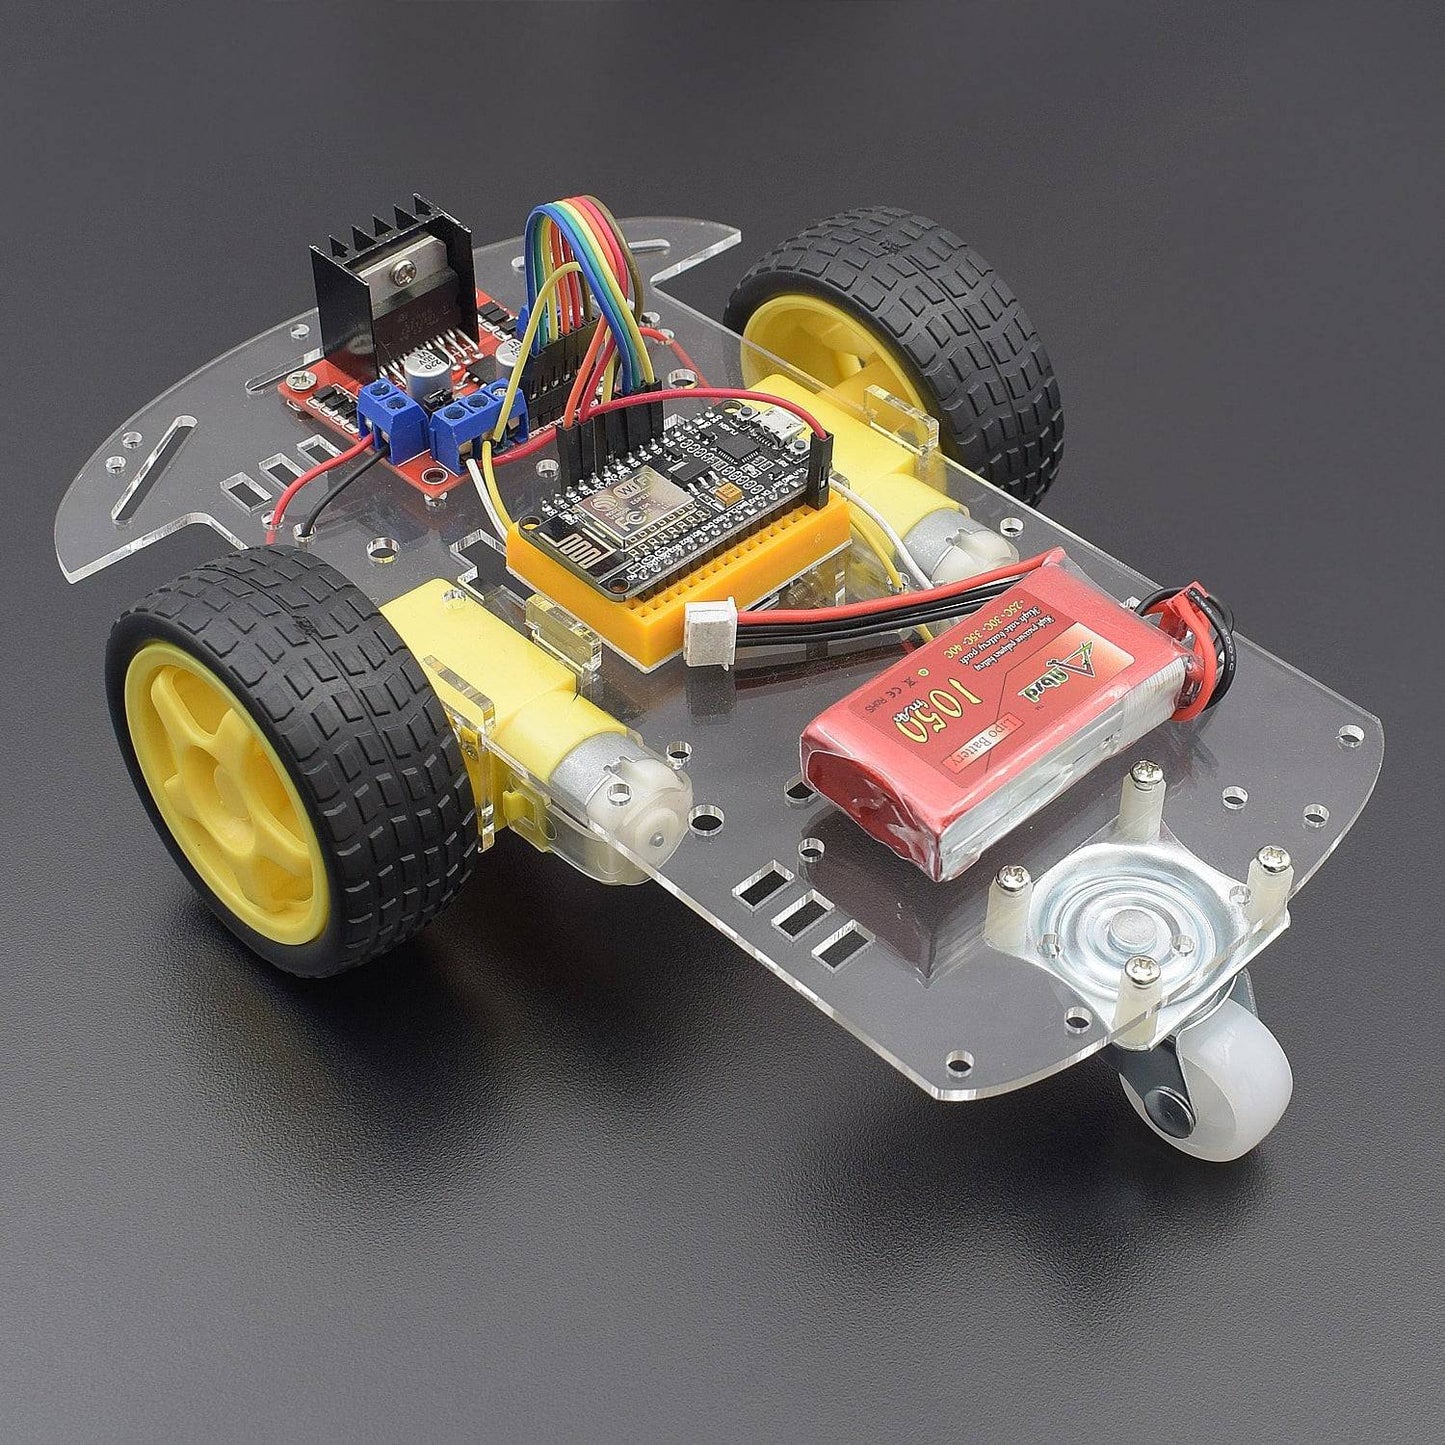 Make an IoT based robotic Wi-Fi car using L298n Motor driver module and NodeMCU ESP8266-12e Wi-Fi board - KT563 - REES52